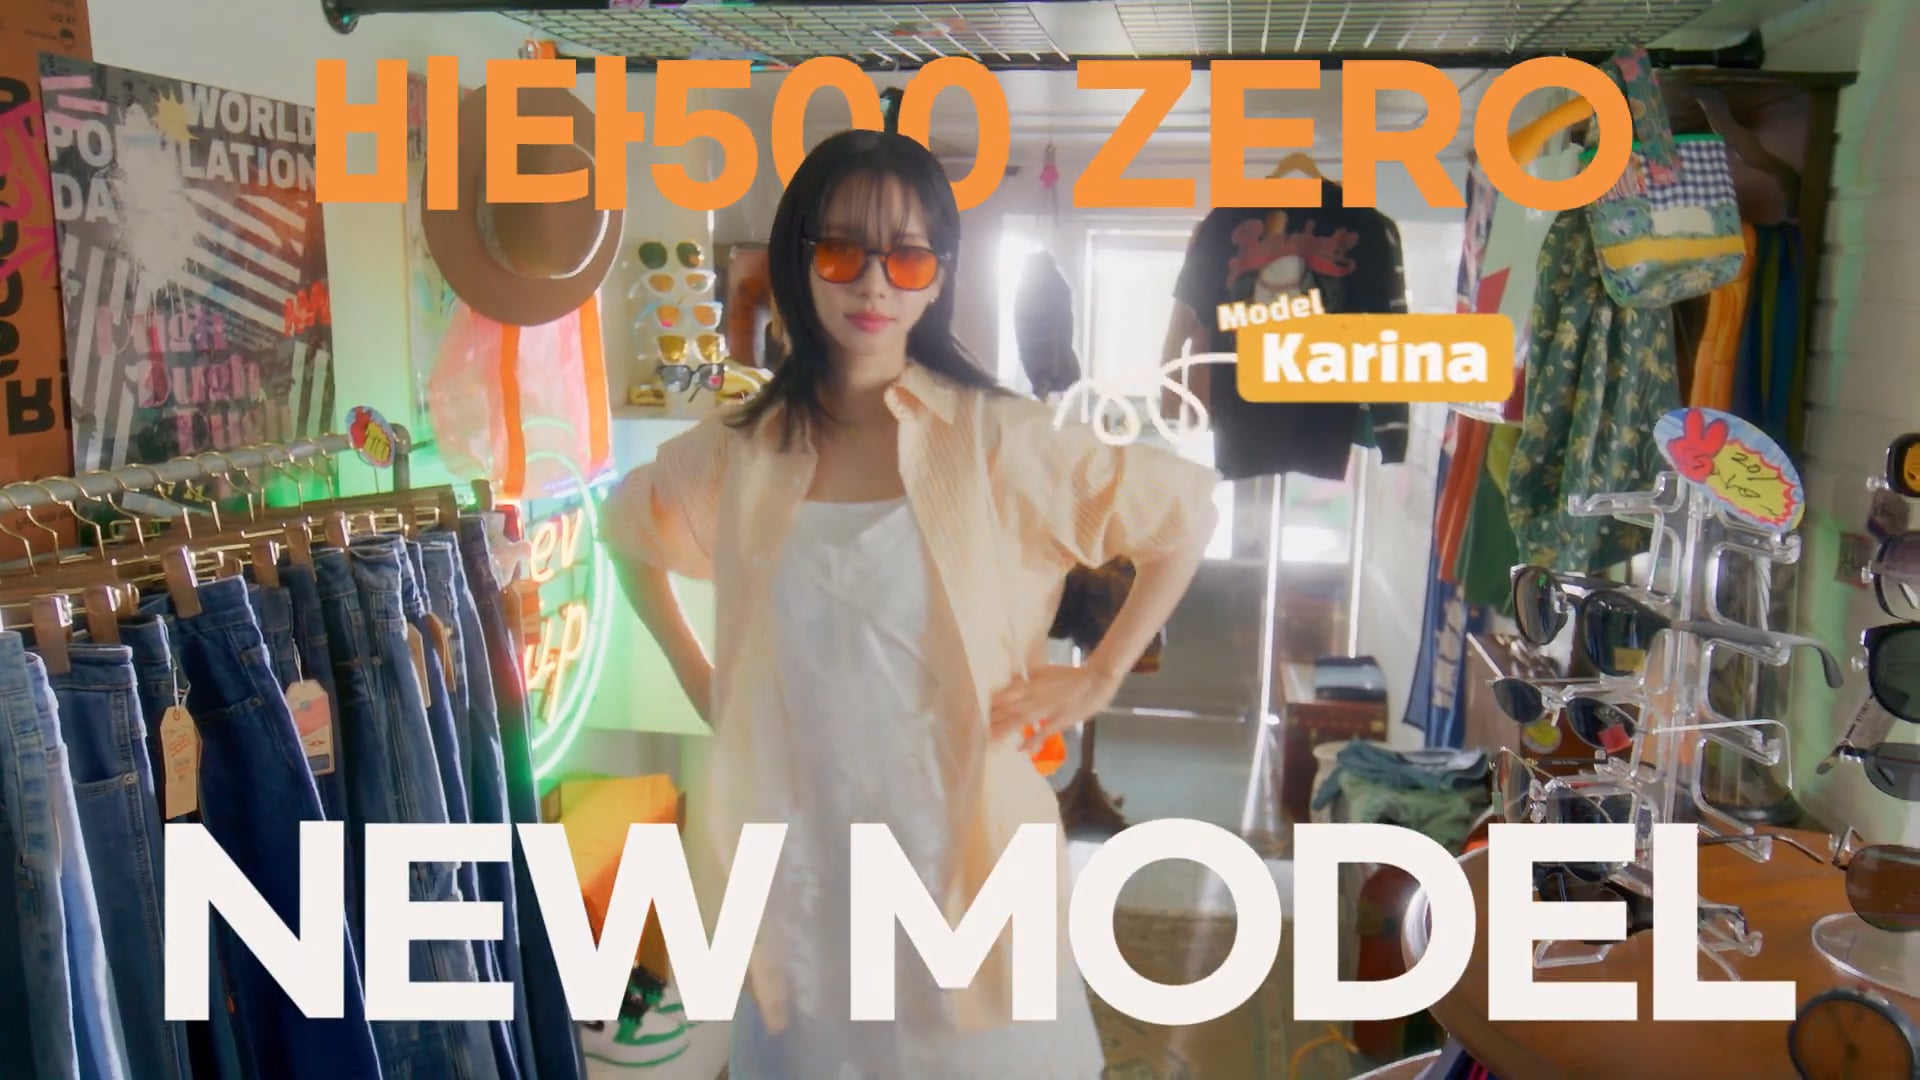 240411 Karina has been revealed as the new model for Vita 500 ZERO!